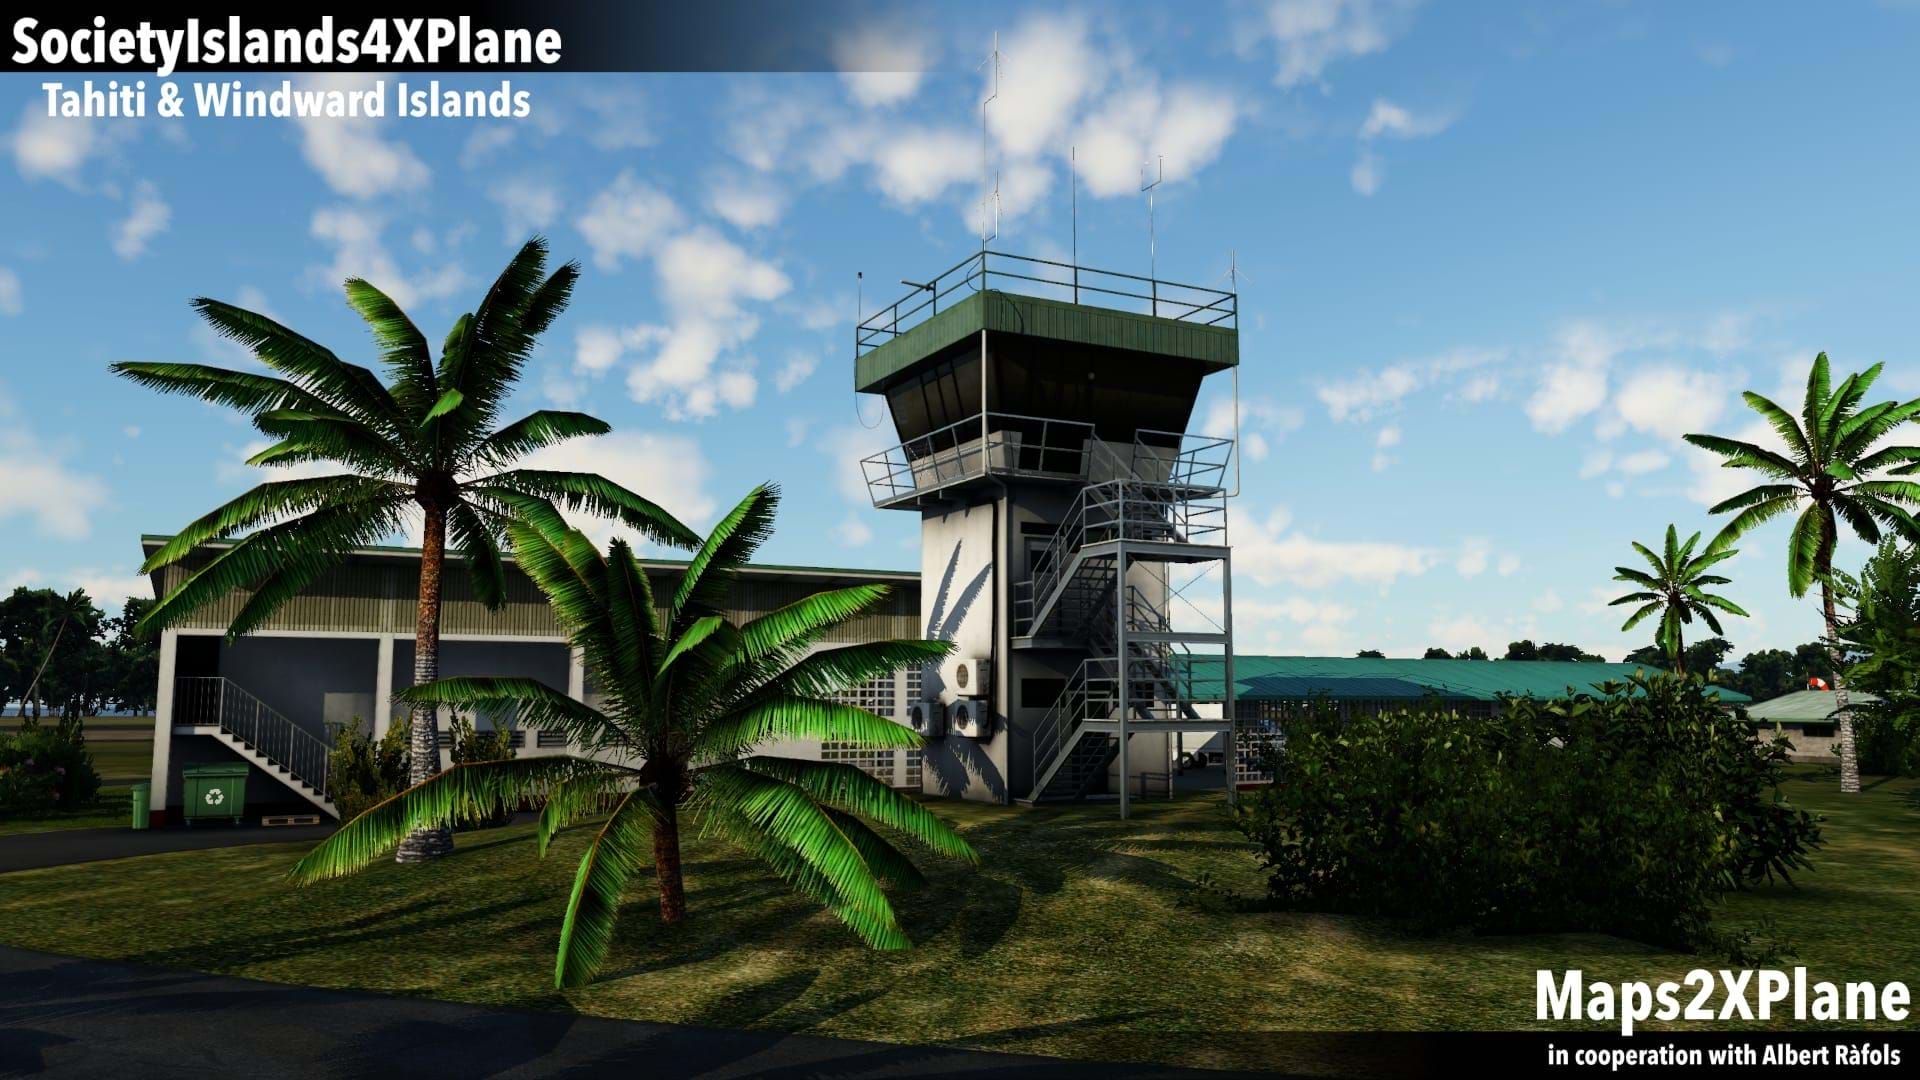 Maps2XPlane Society Islands XP - Tahiti & Windward Islands for X-Plane 11/12